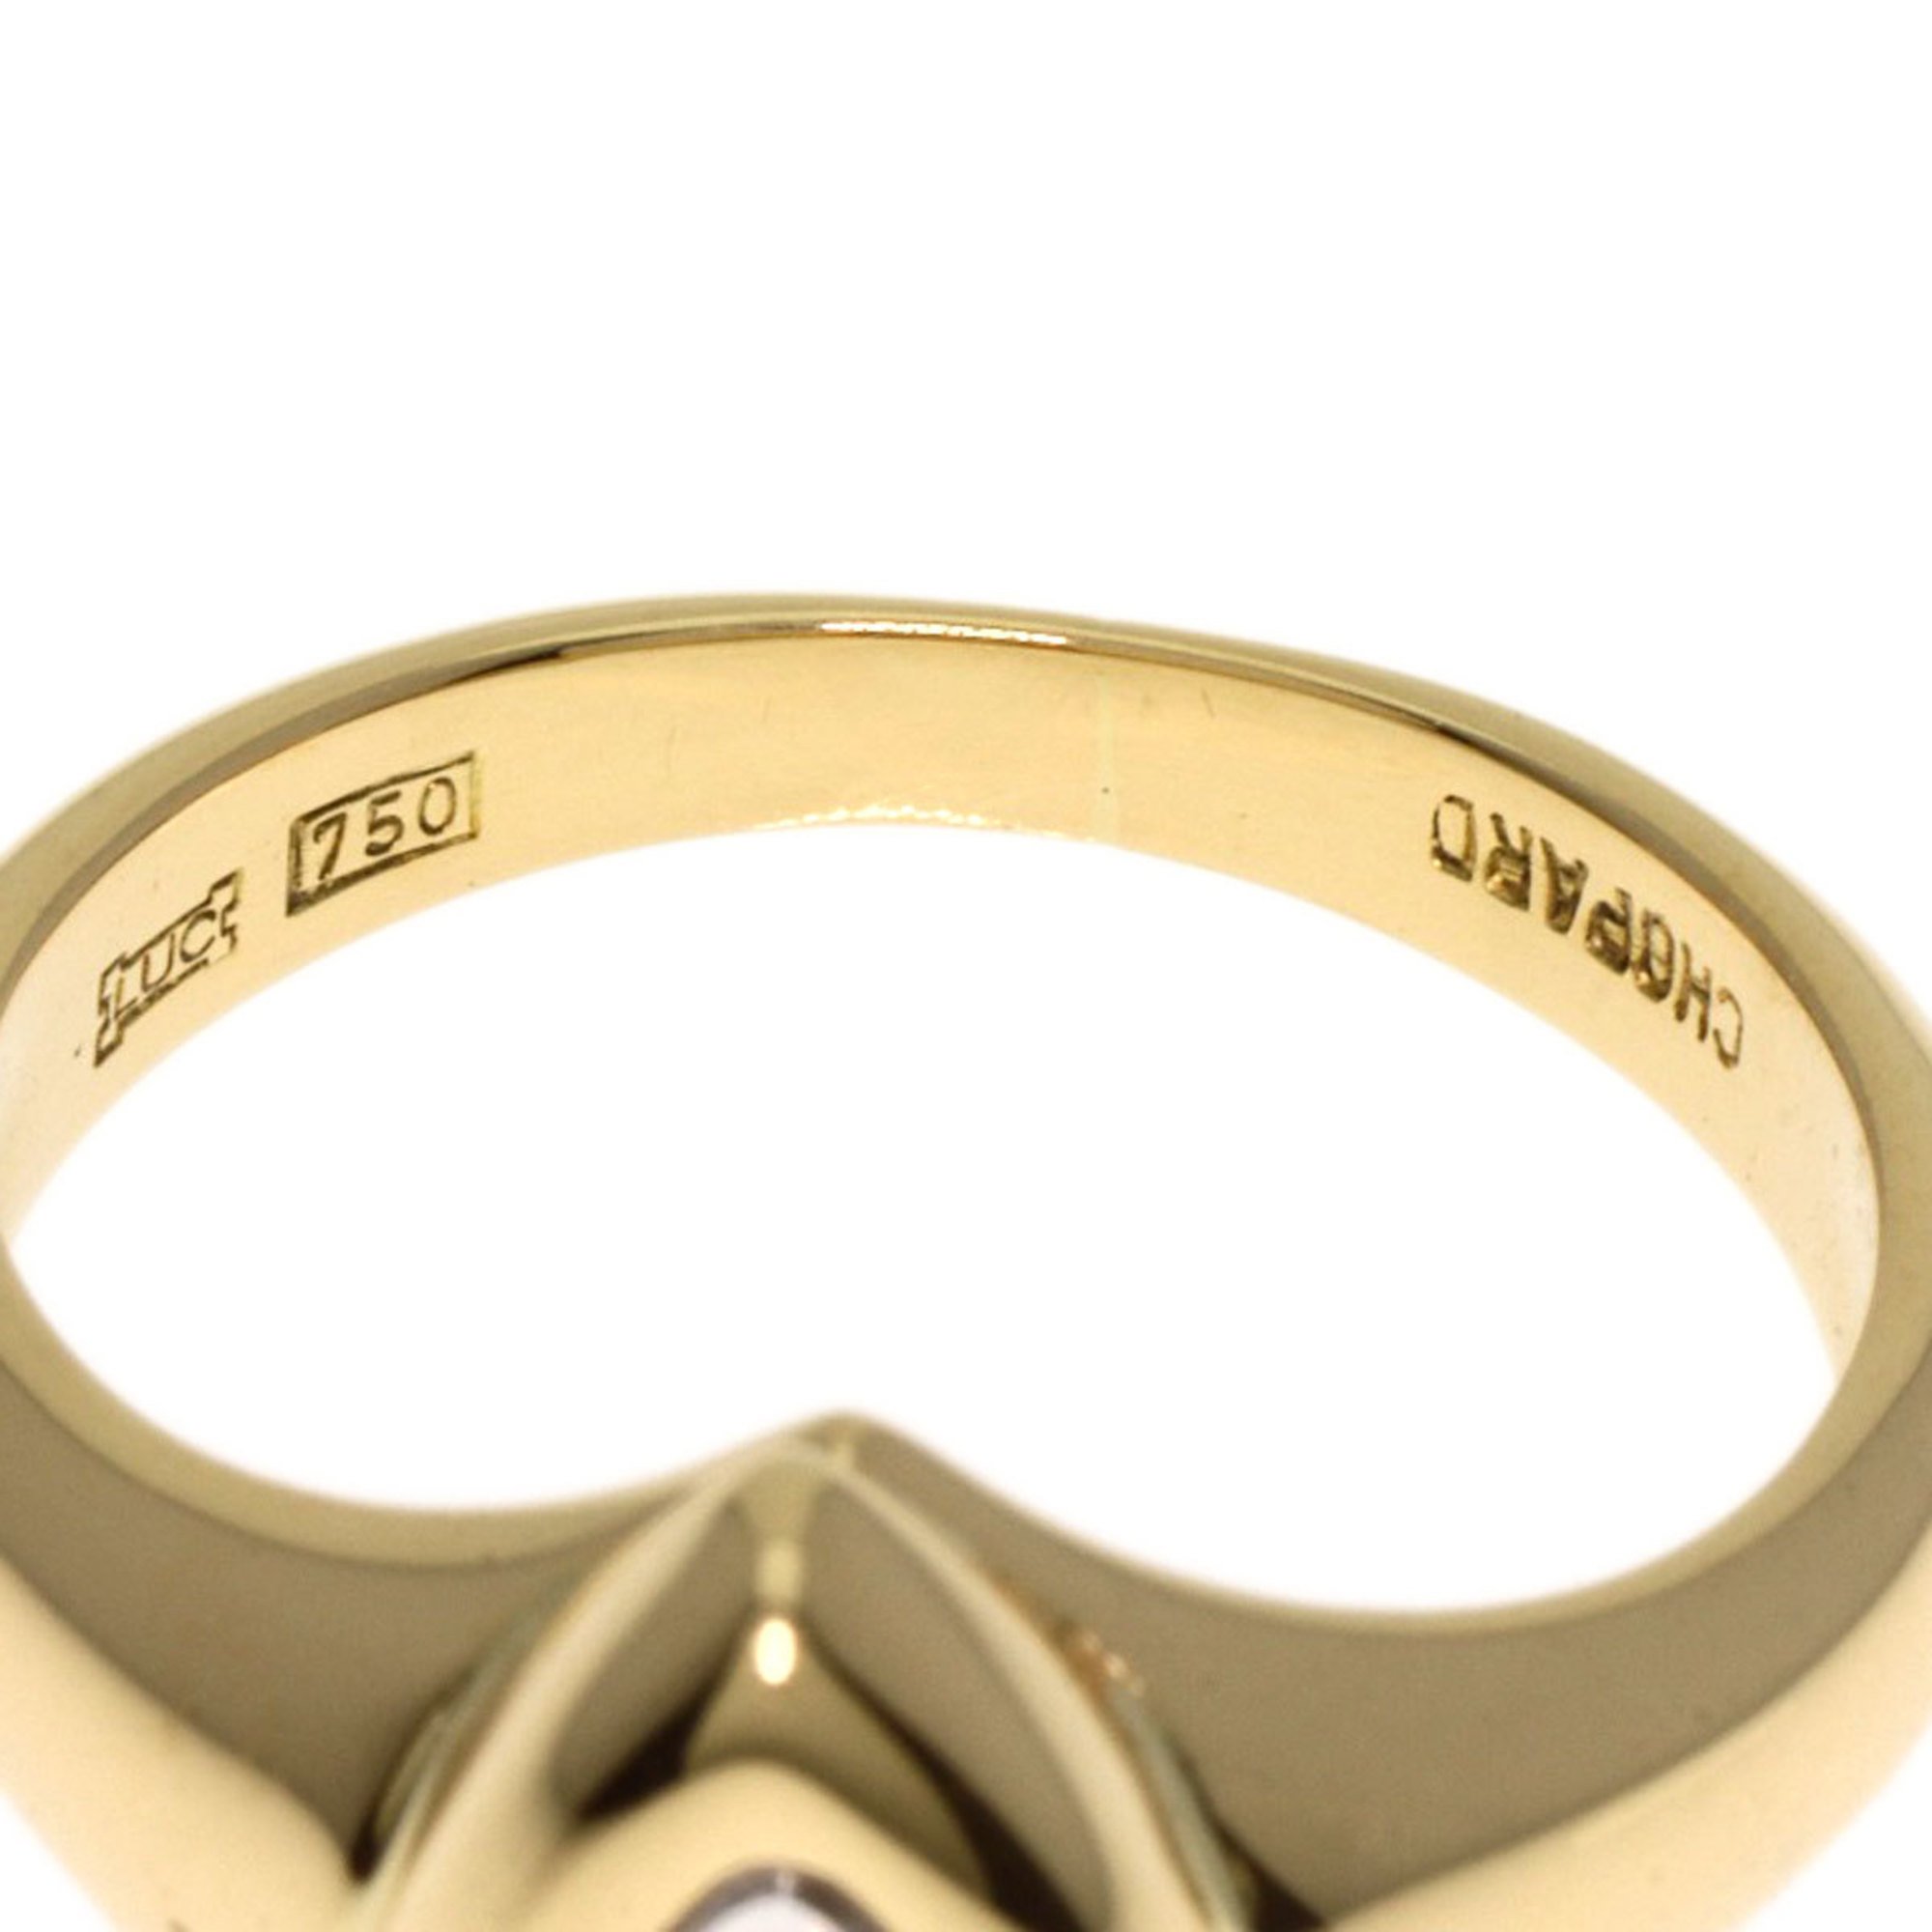 Chopard Happy Diamonds Ring, 18K Yellow Gold, Women's